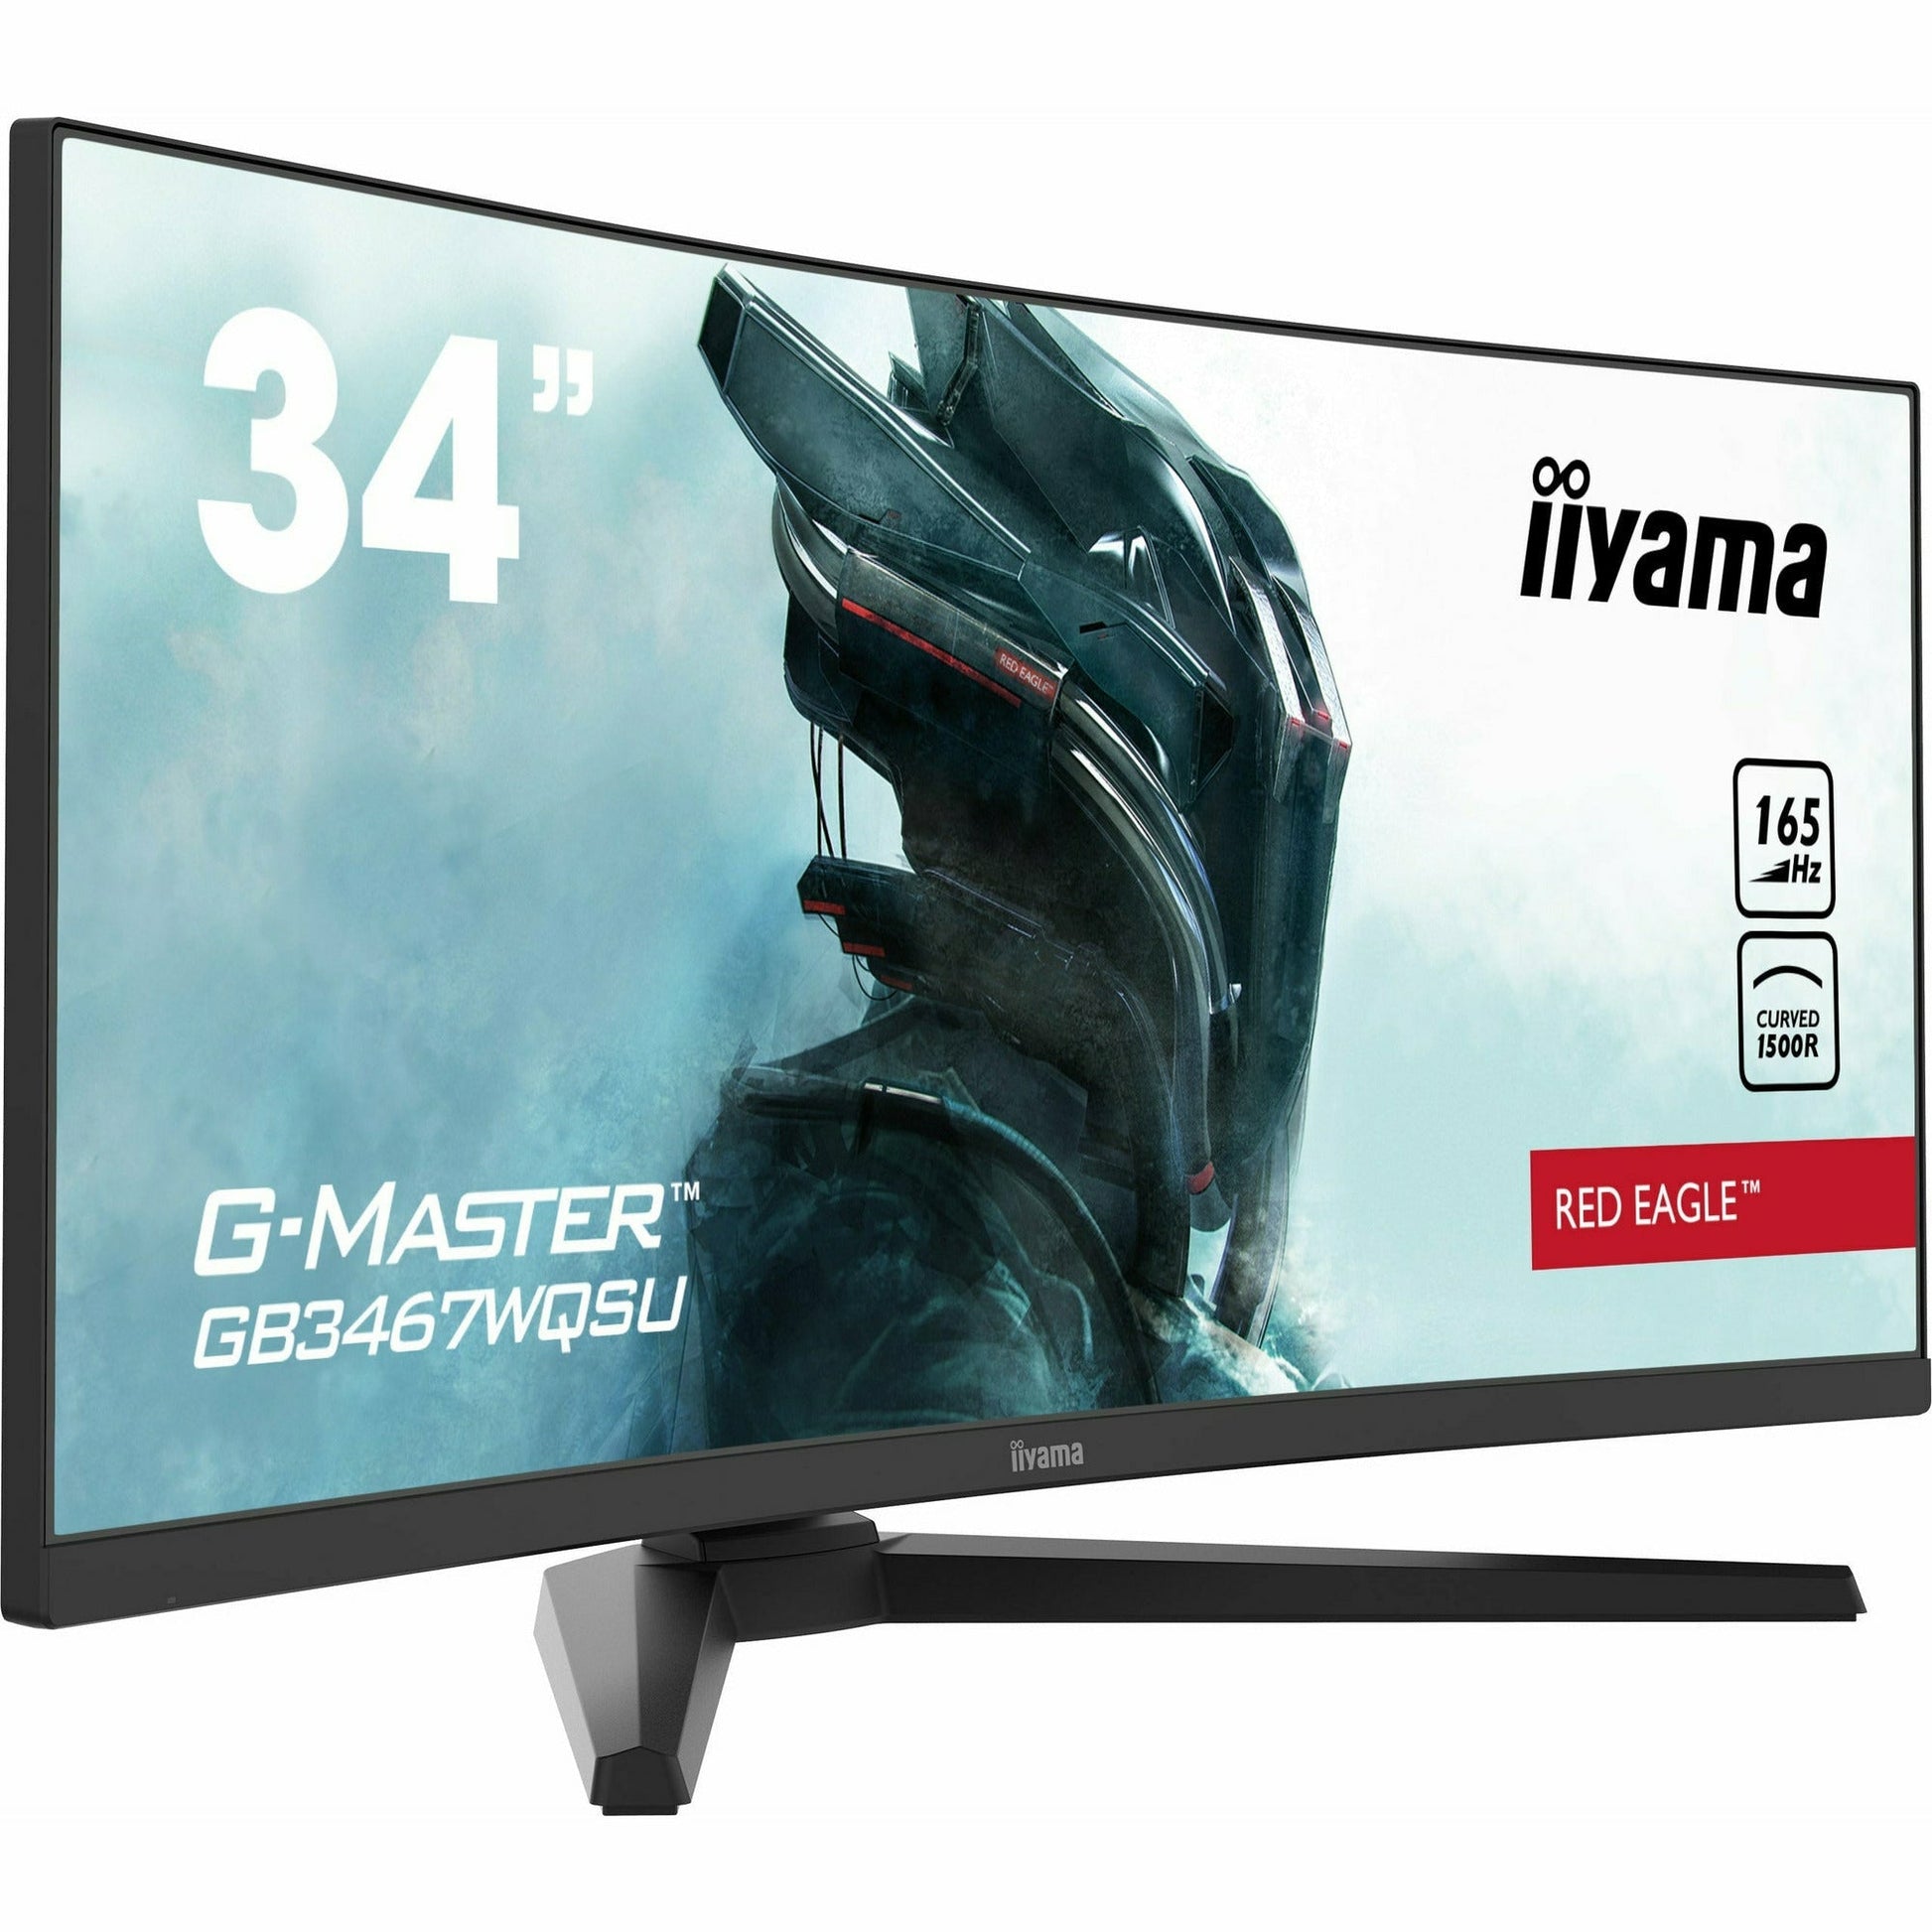 iiyama G-Master GB3467WQSU-B1 Curved 1500R 34" Gaming Monitor